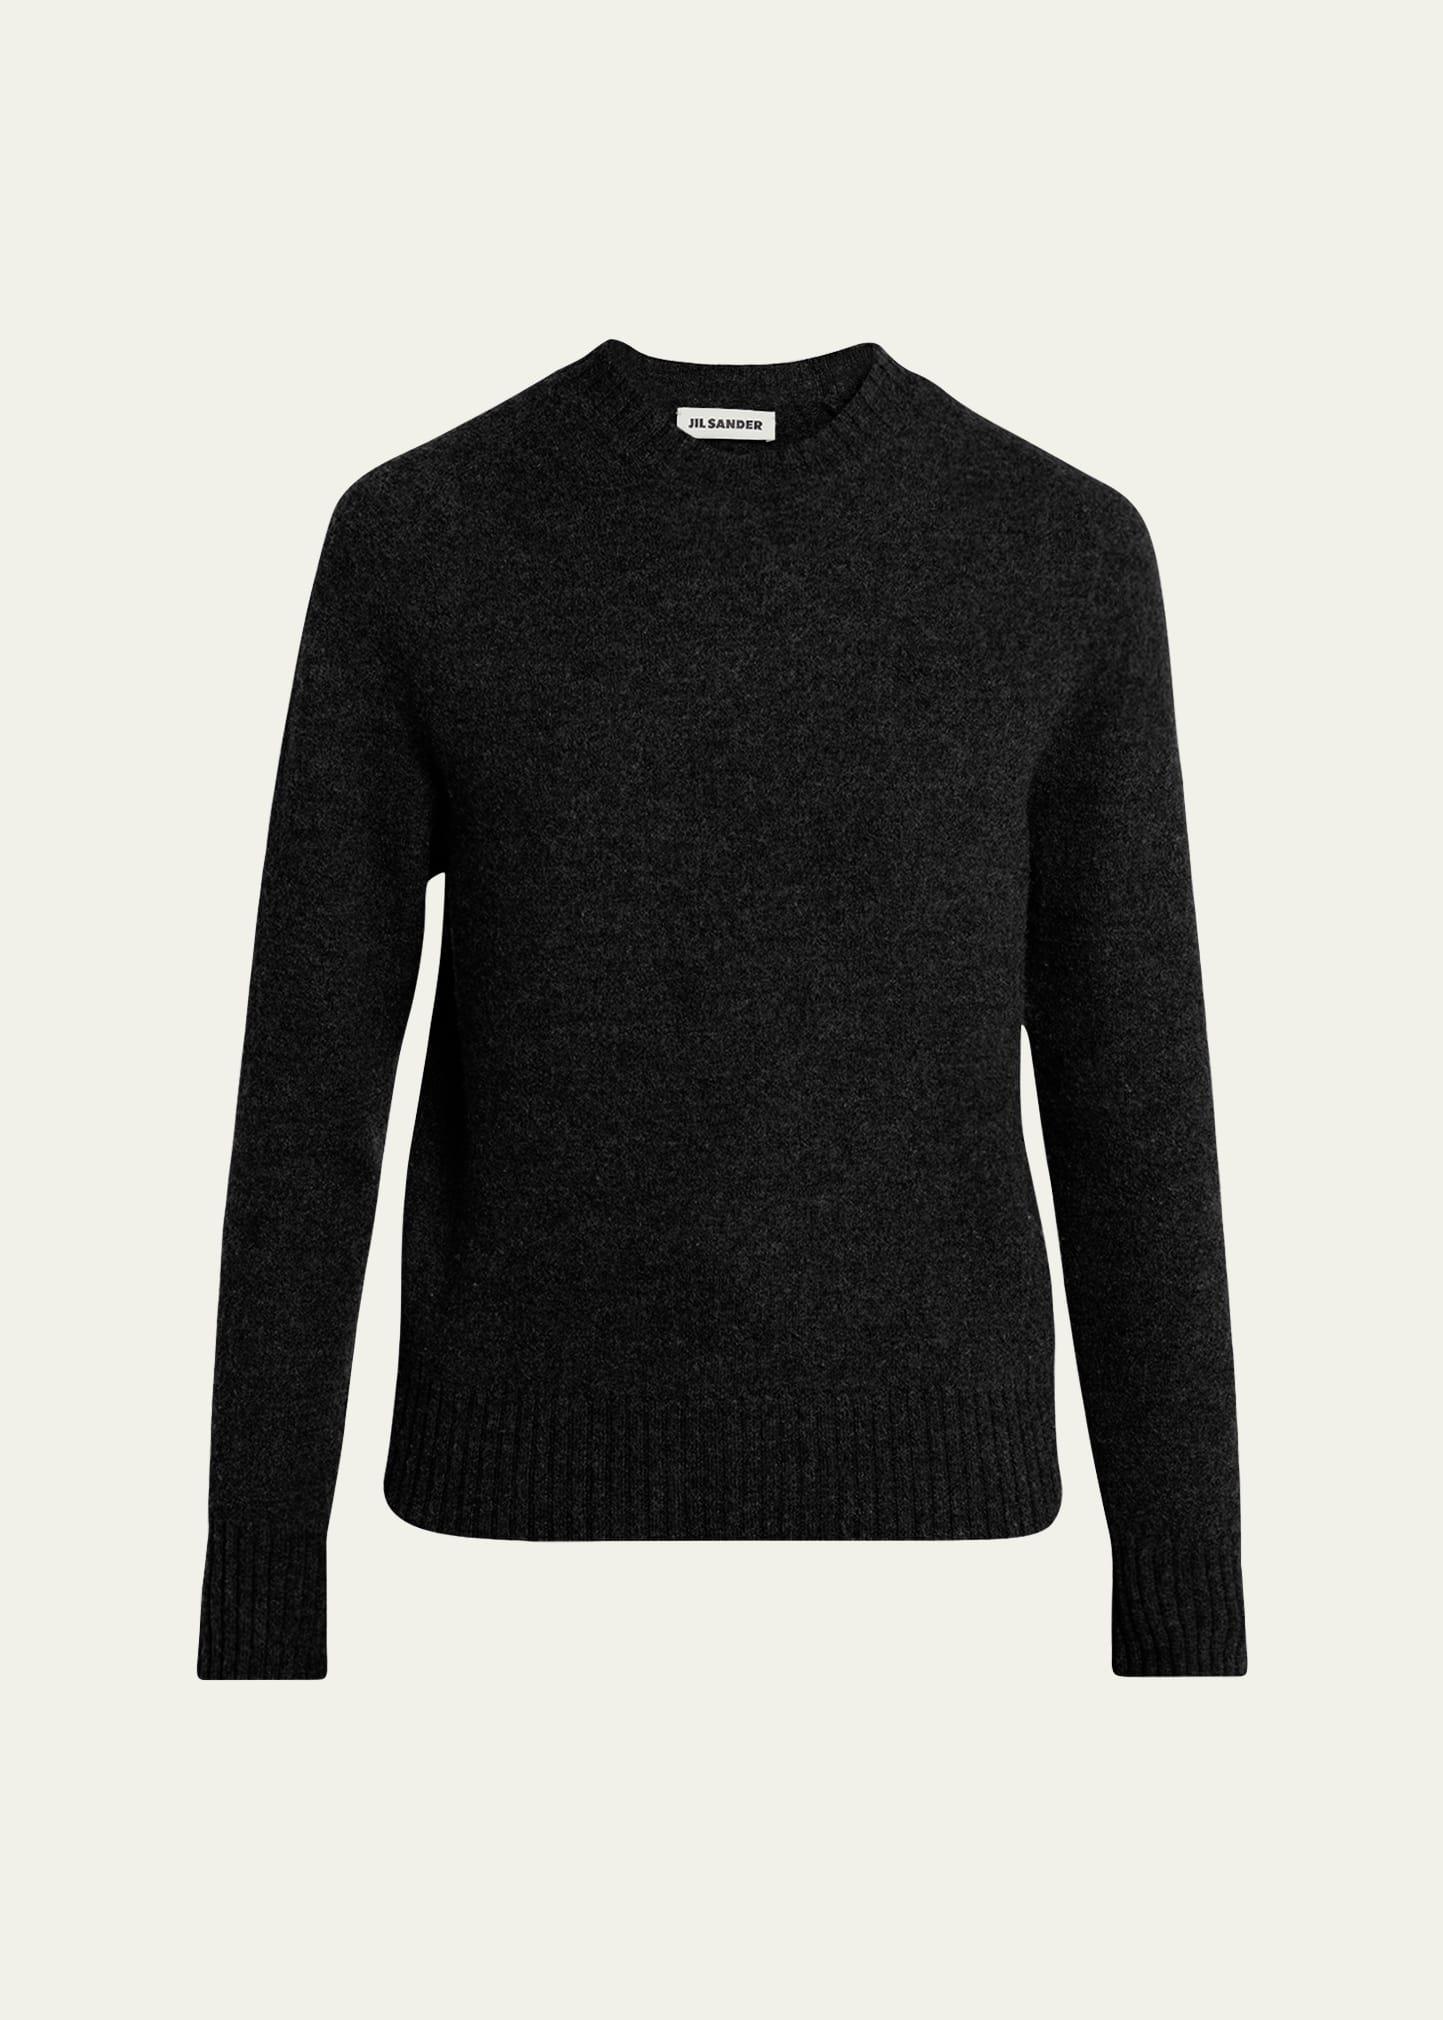 Womens Wool Crewneck Sweater Product Image